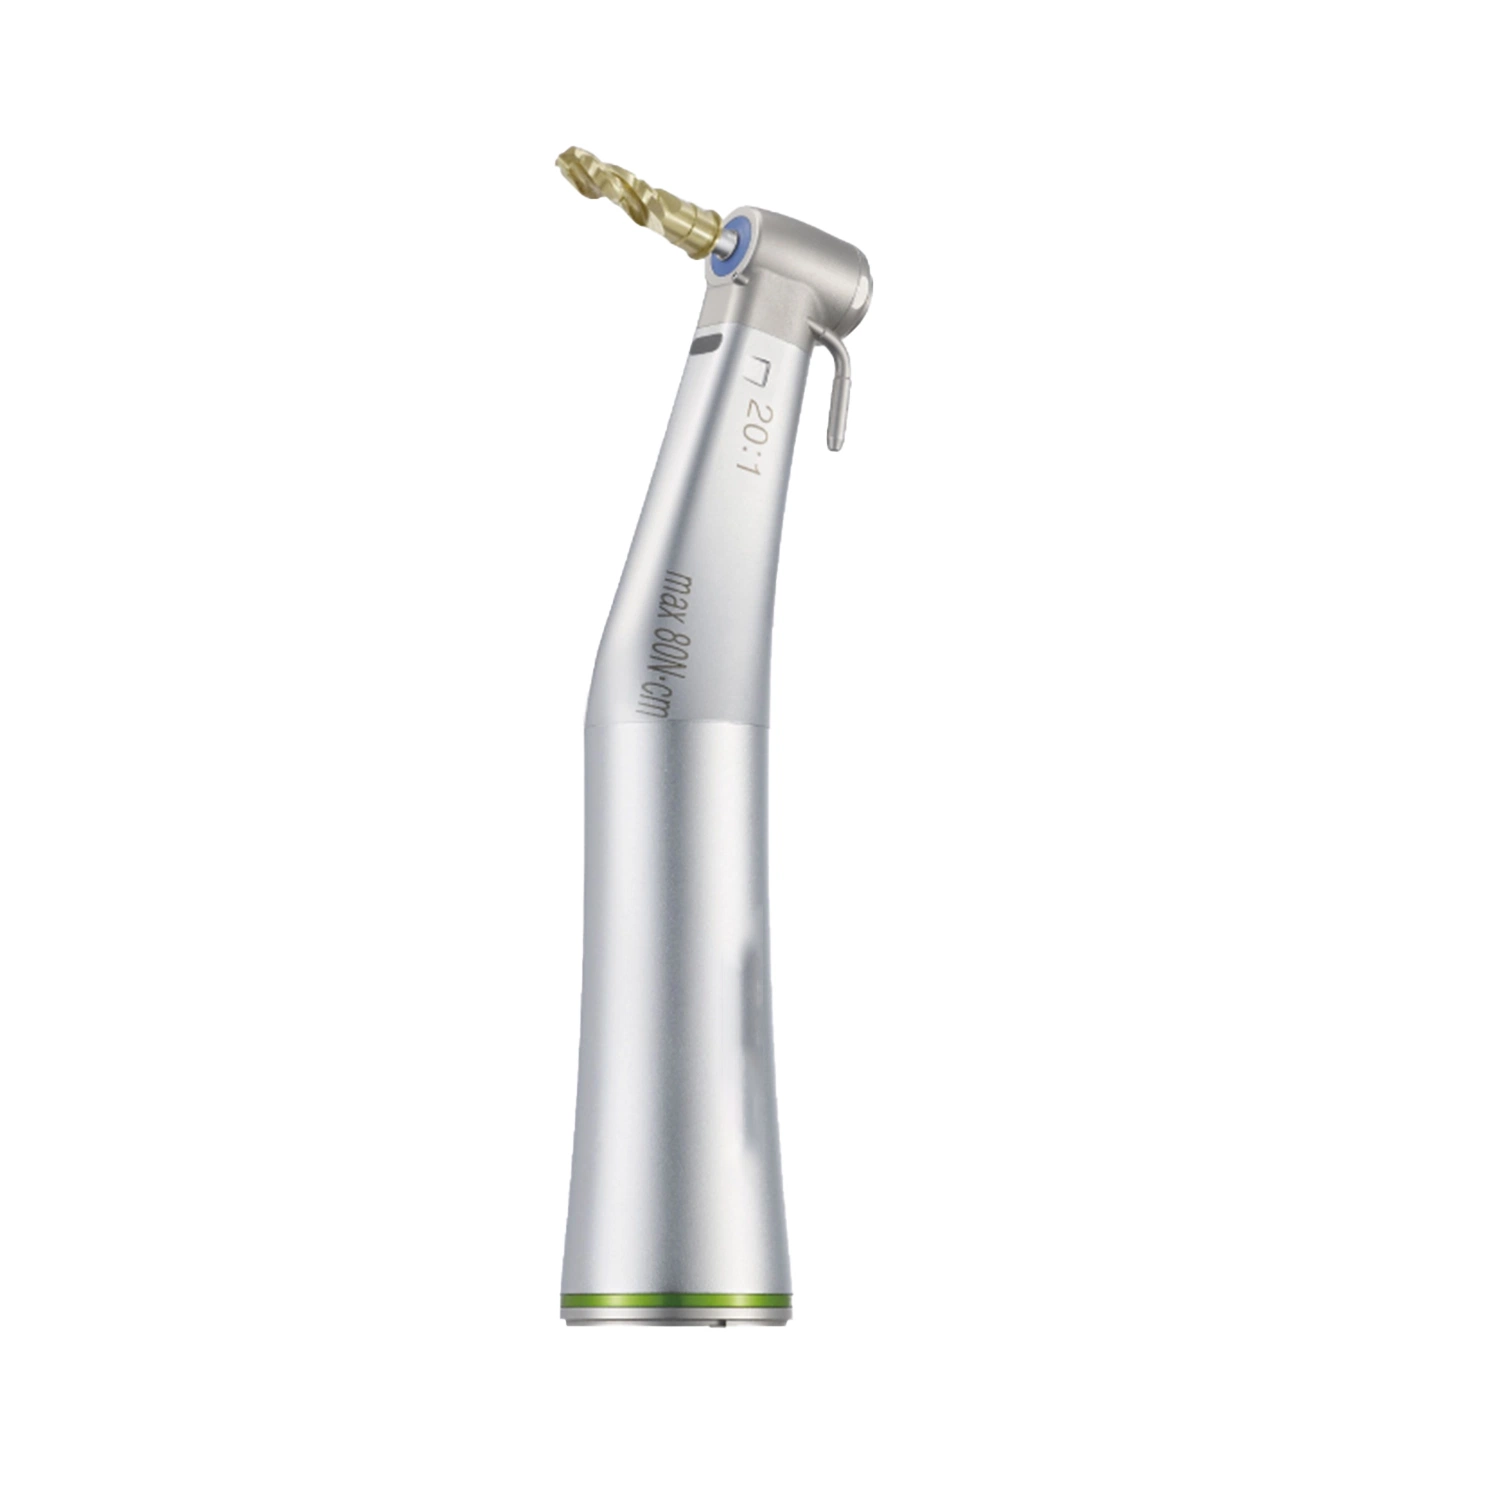 Dental Implants Torque Range 5-70n-Cm with 20: 1 Hand Piece